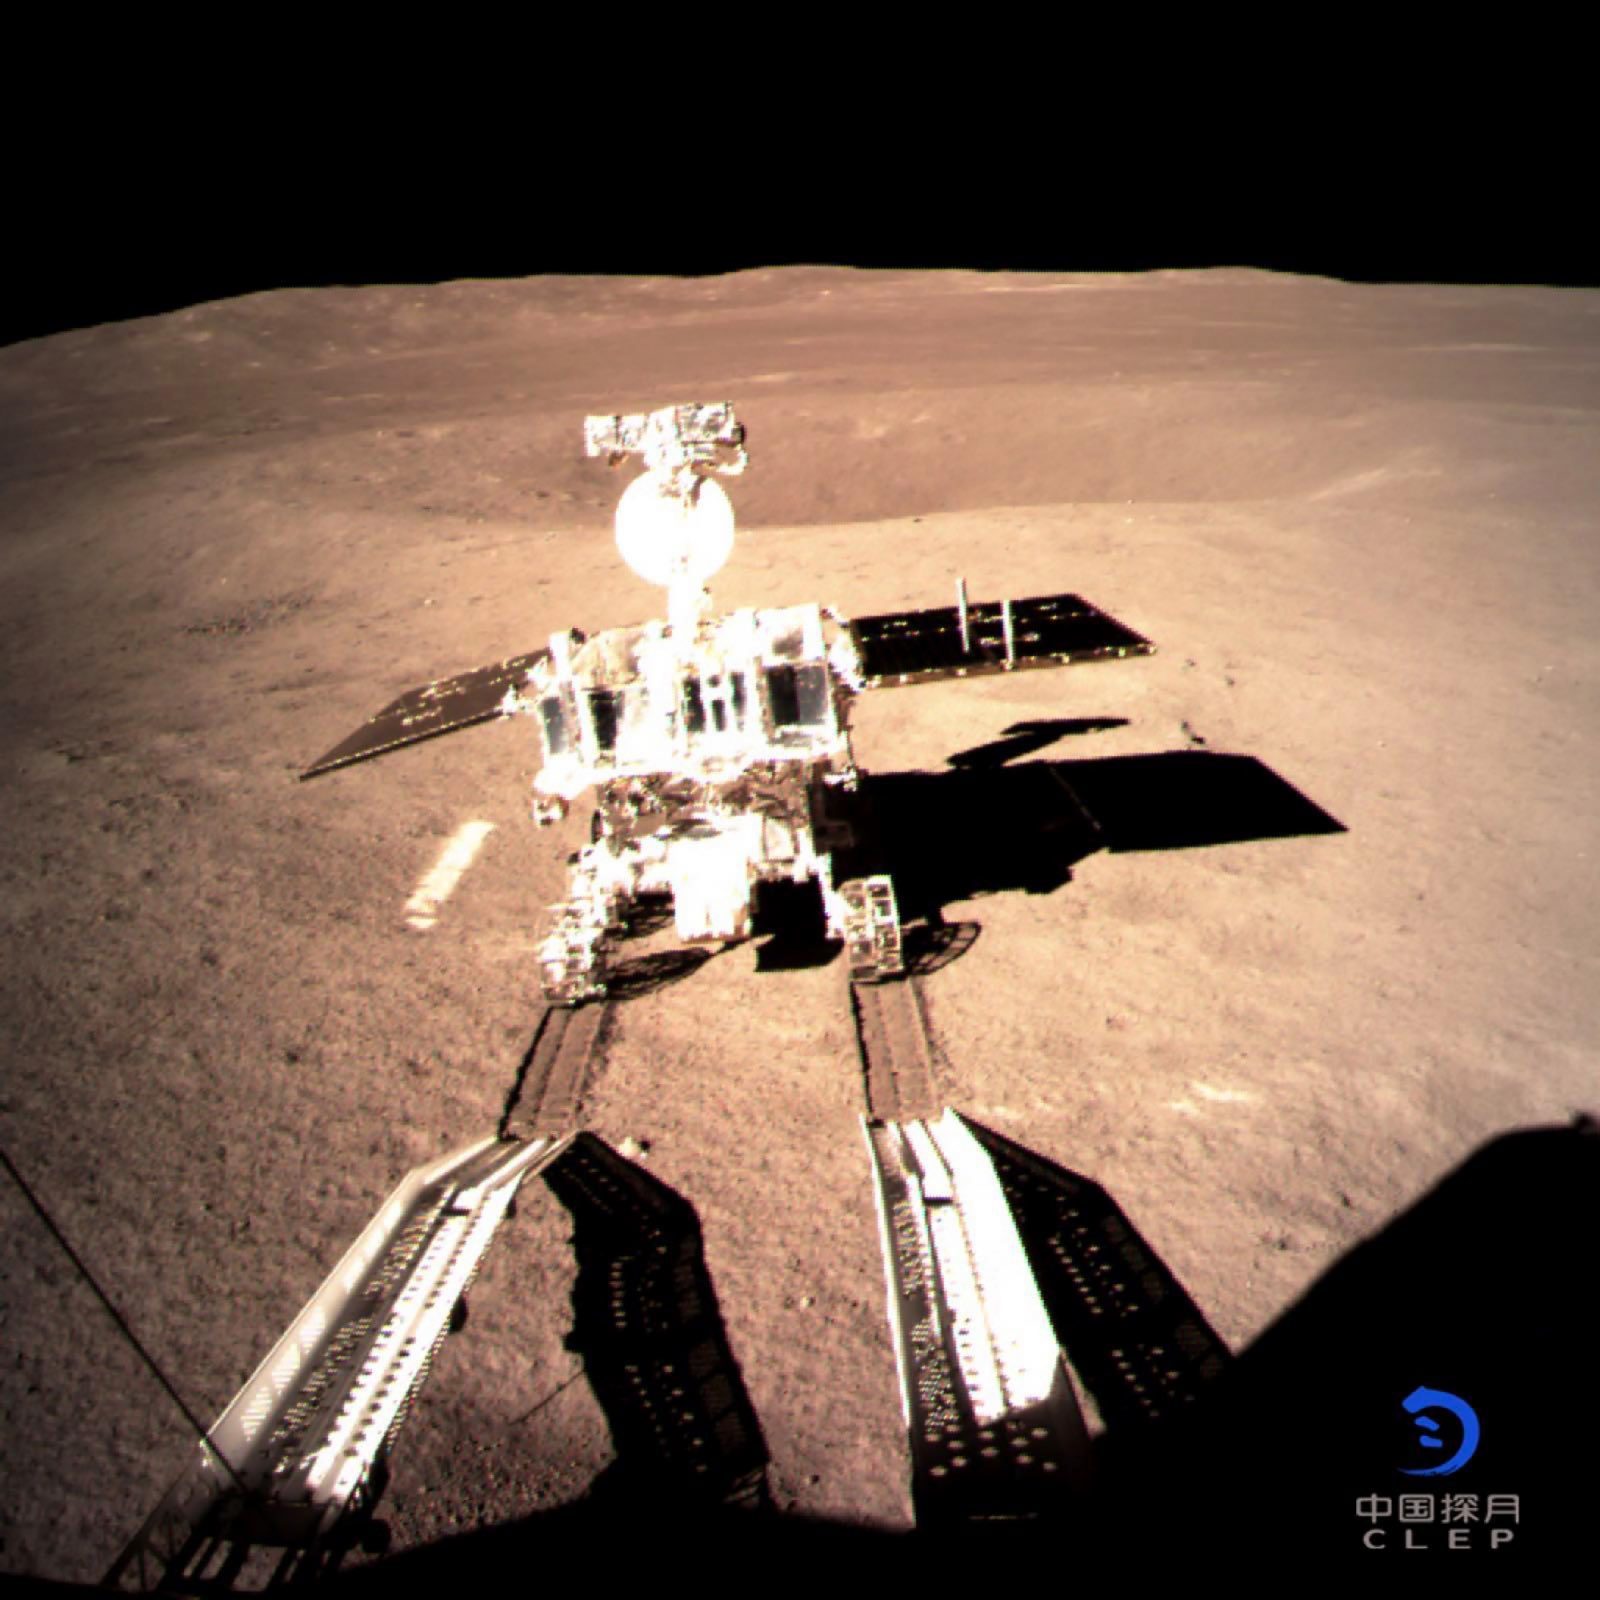 China’s robotic lunar rover